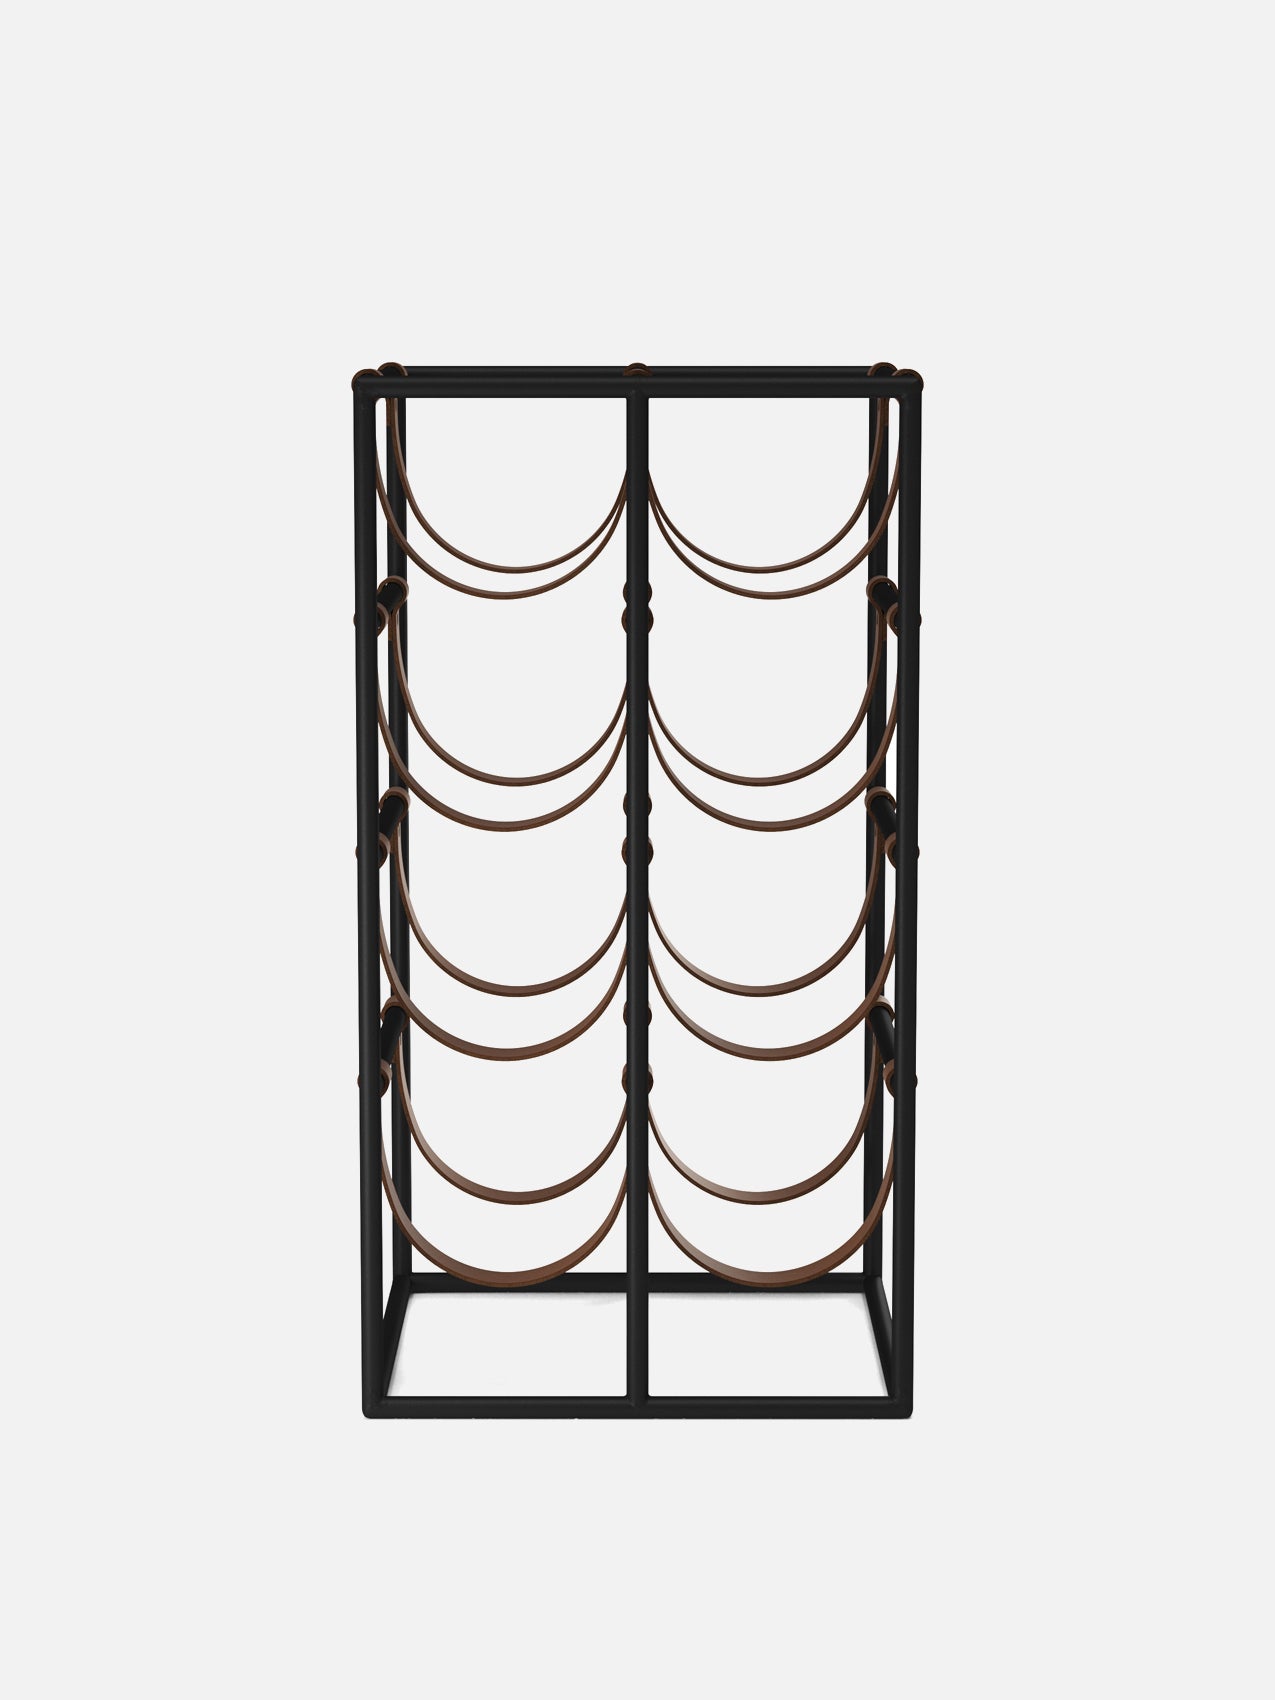 Umanoff Wine Rack-Wine Rack-Arthur Umanoff-Black Powder Coated Steel-menu-minimalist-modern-danish-design-home-decor